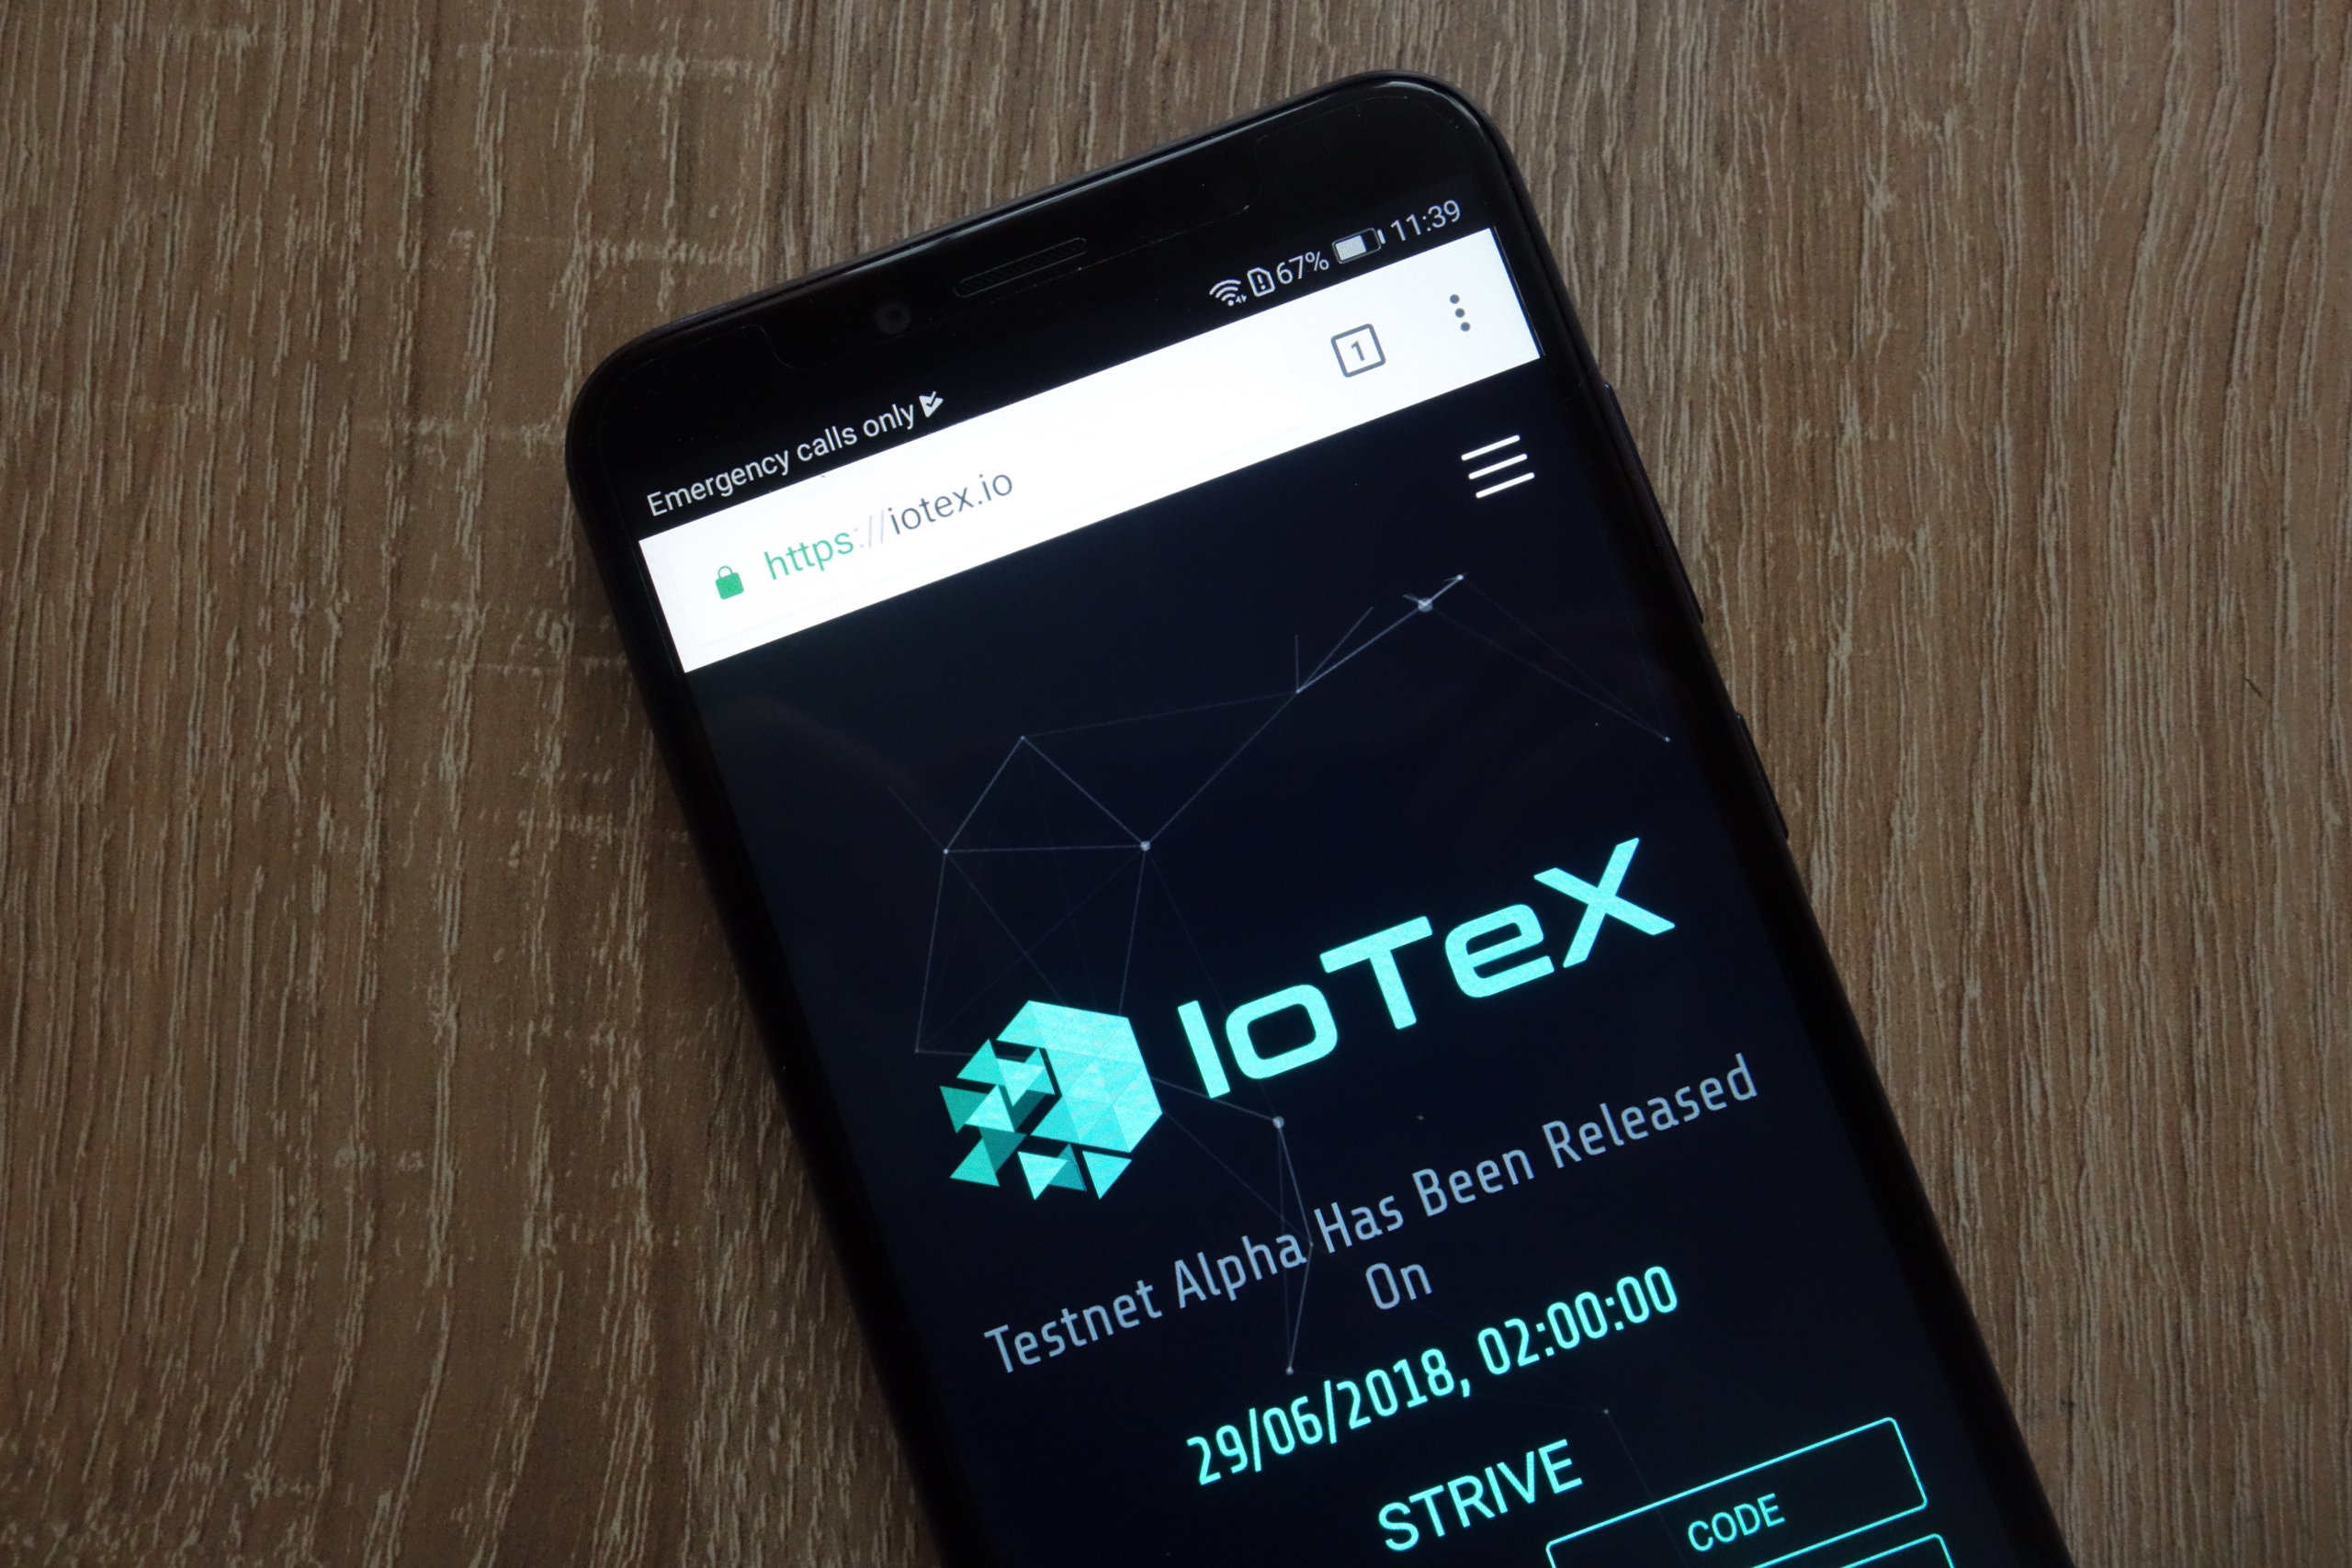  announcing partnerships iotex key usd iotx price 